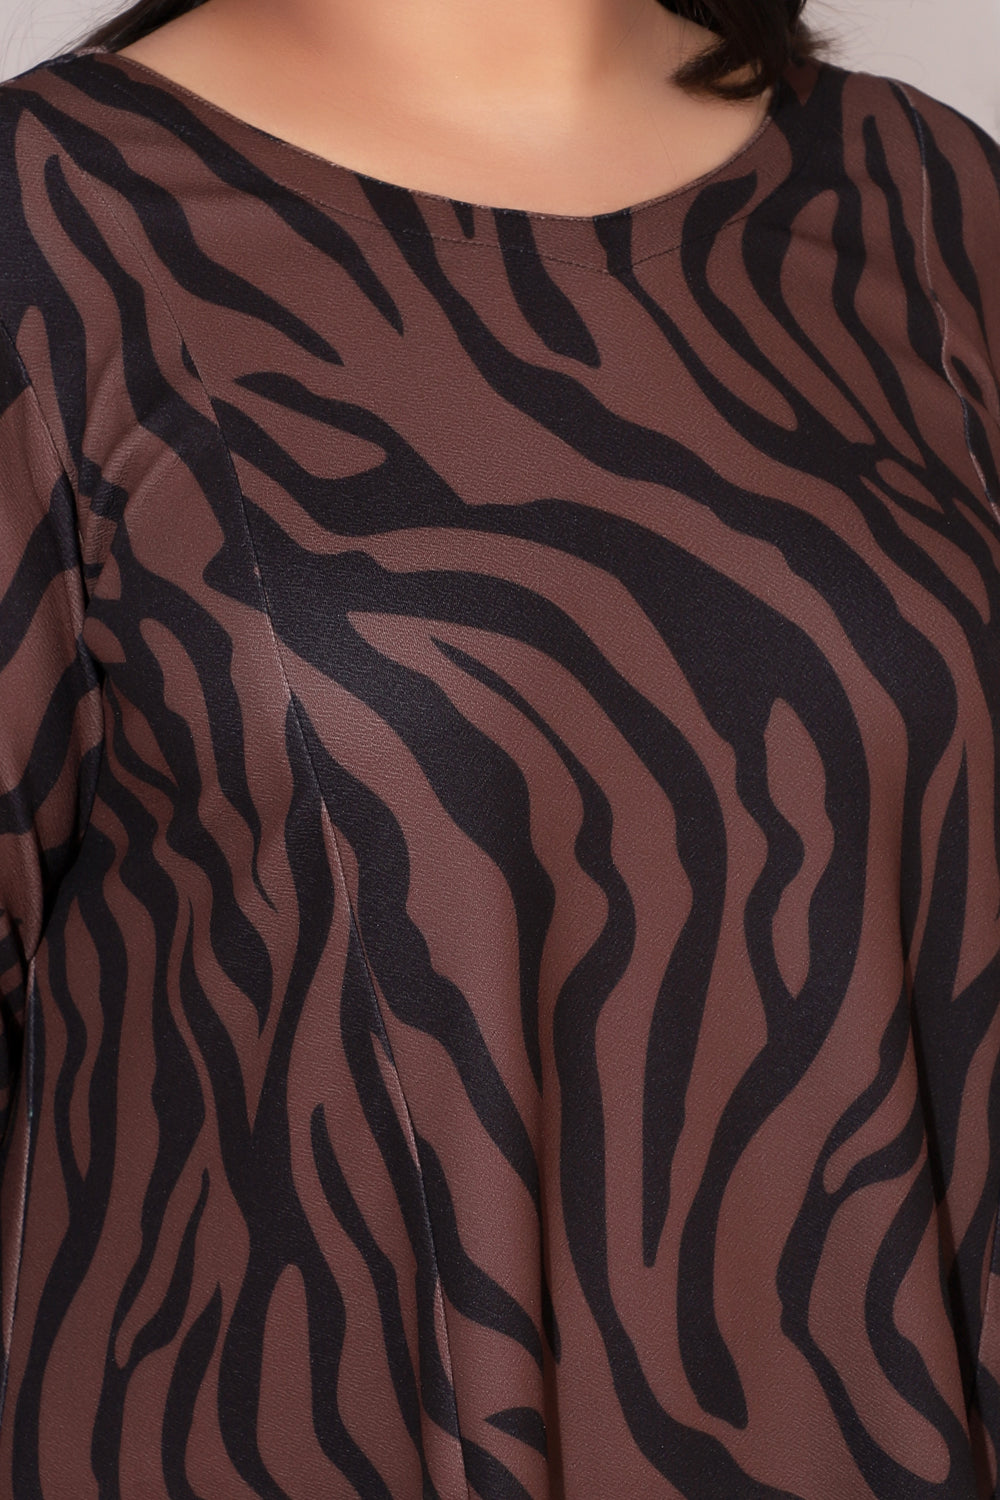 Buy Bronze Tiger Printed Dress